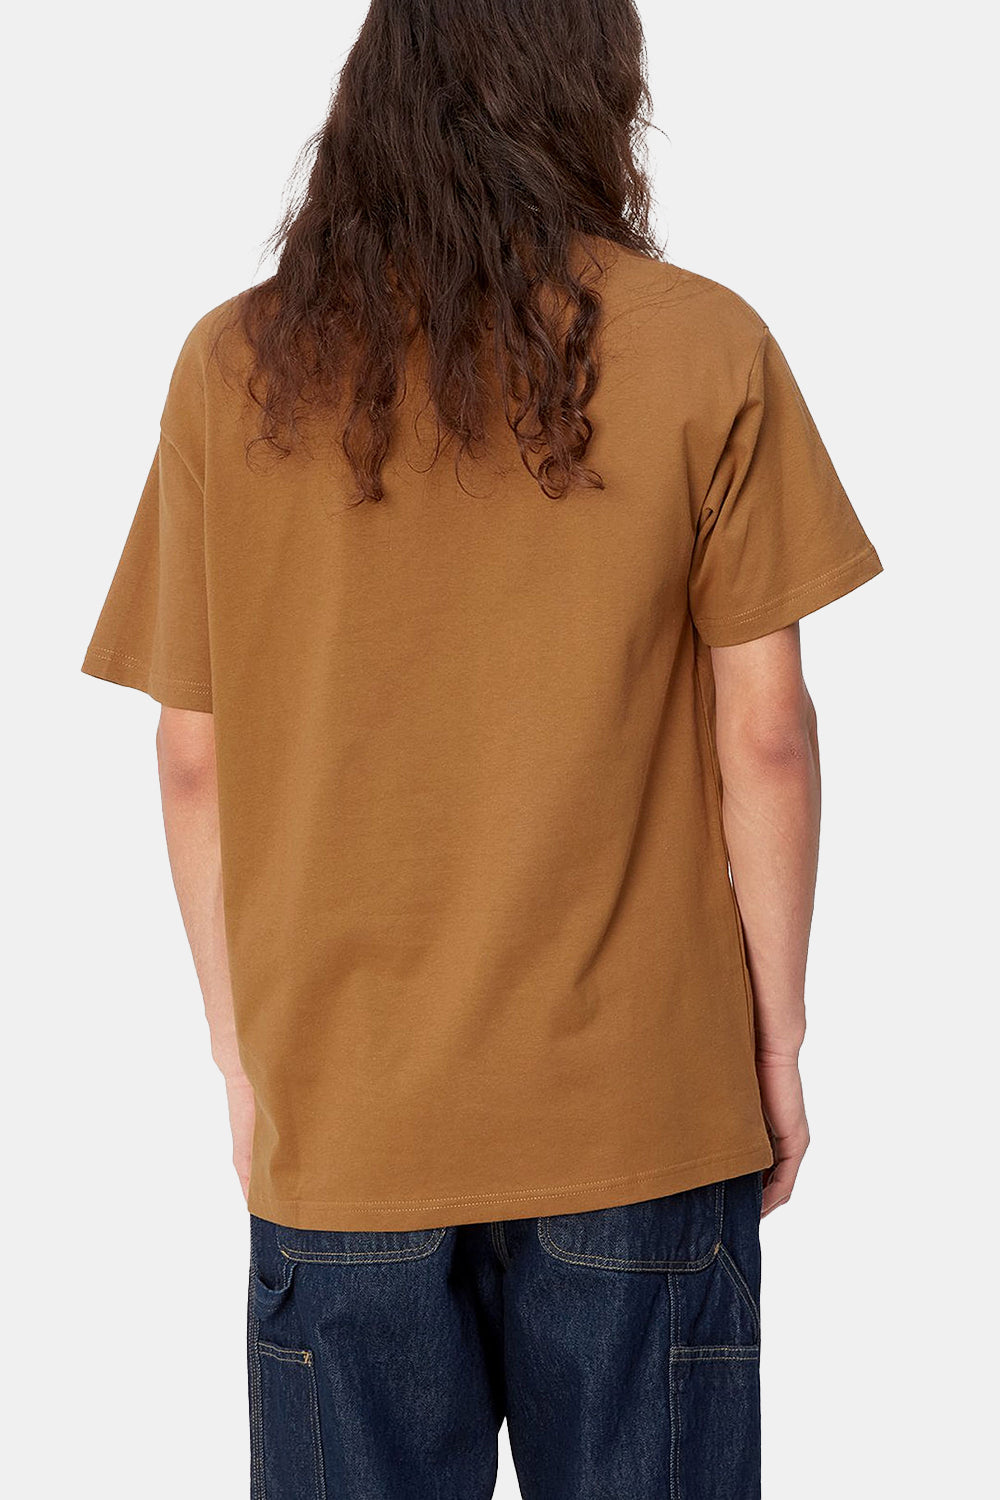 Carhartt WIP Short Sleeve Icons T-Shirt (Hamilton Brown/Black)